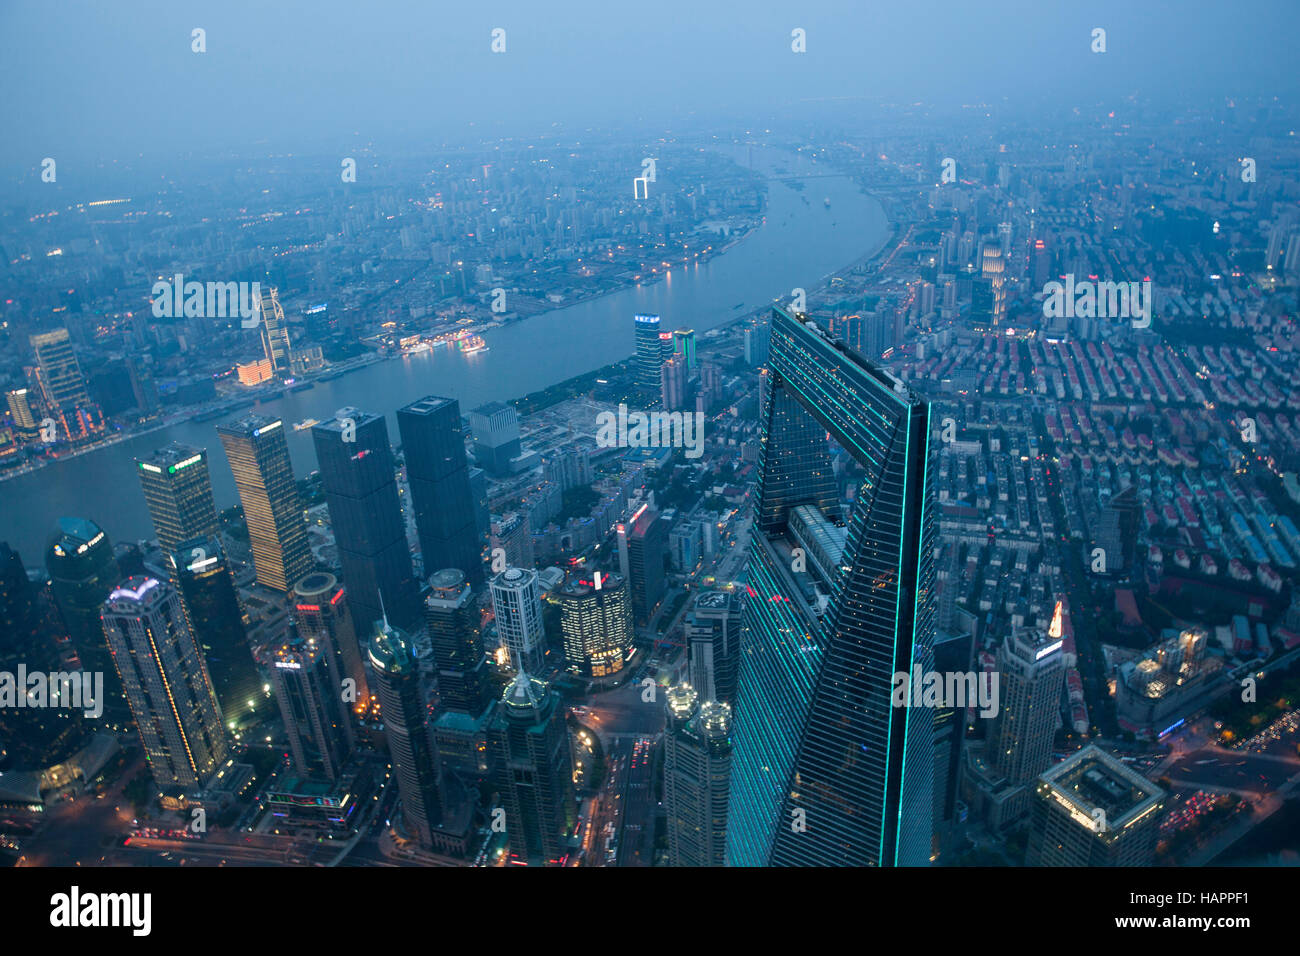 The Shanghai World Financial Center, Shanghai, China Stock Photo